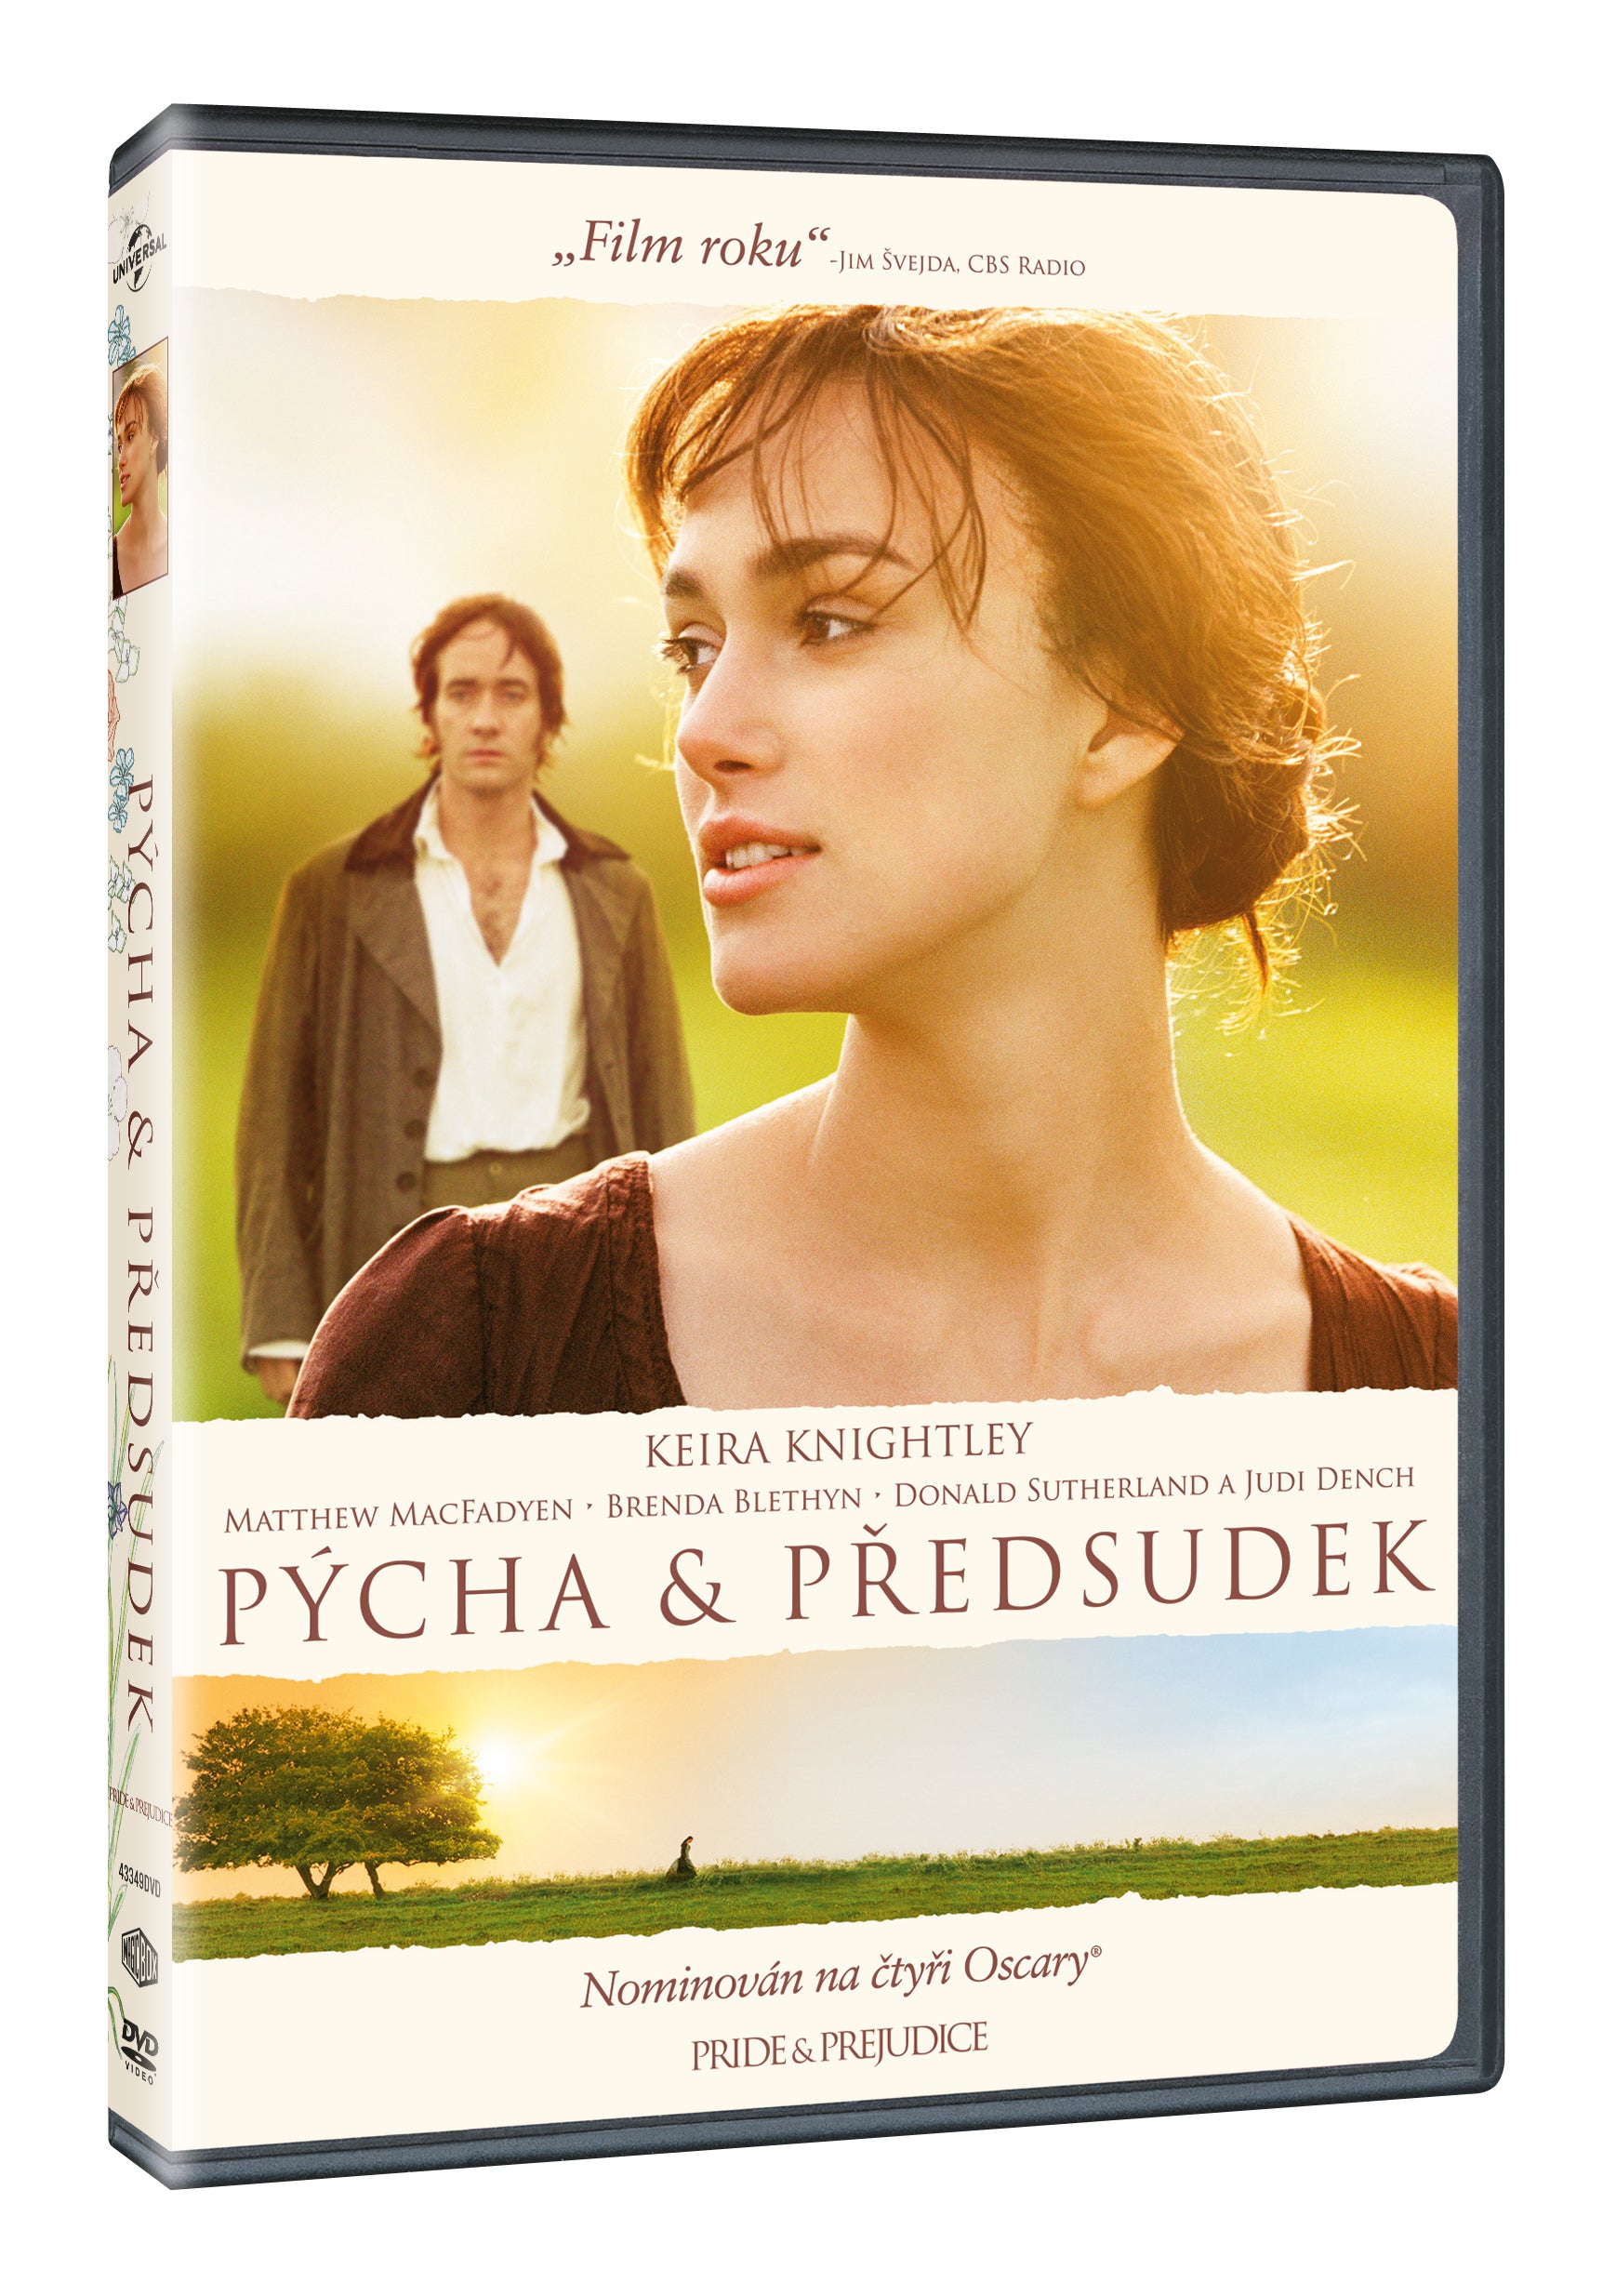 Pycha a predsudek DVD / Pride and Prejudice